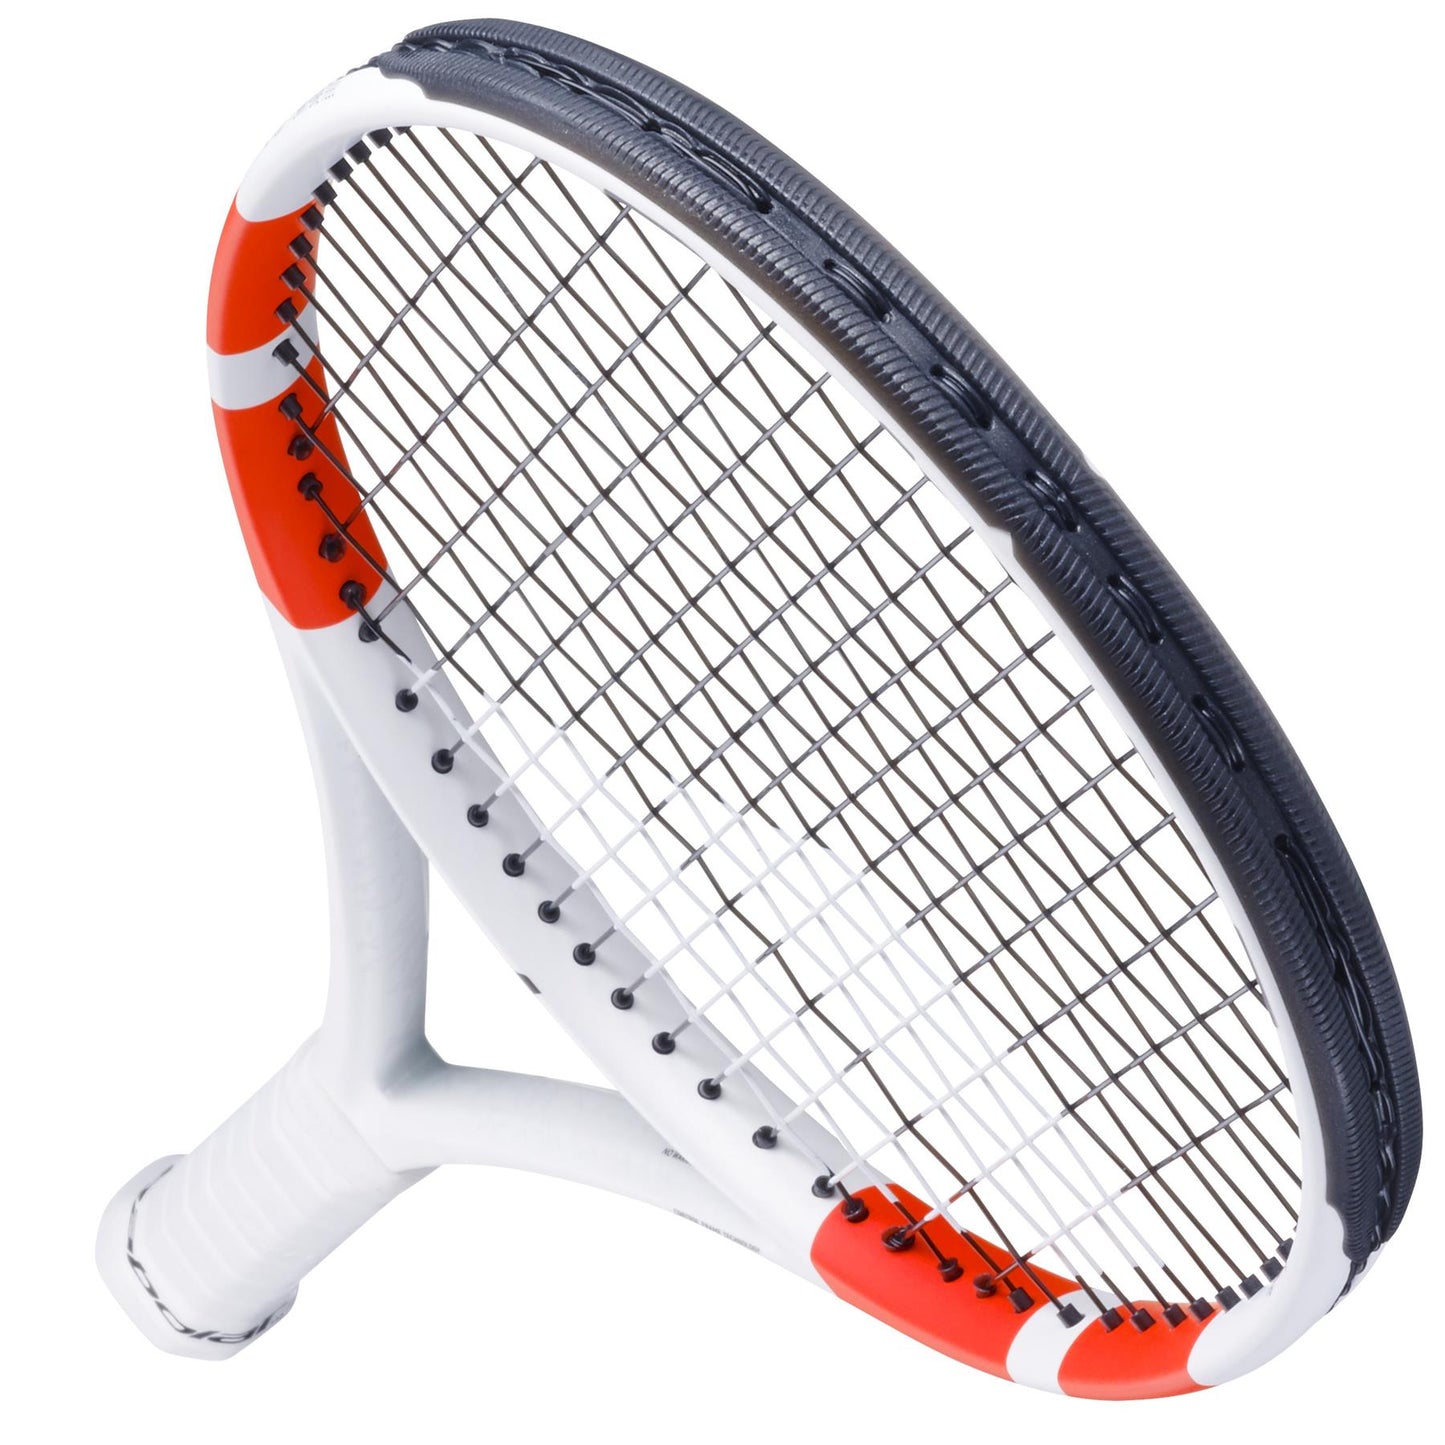 Babolat Pure Strike 100 Gen4 Tennis Racket - White / Red / Black - Top